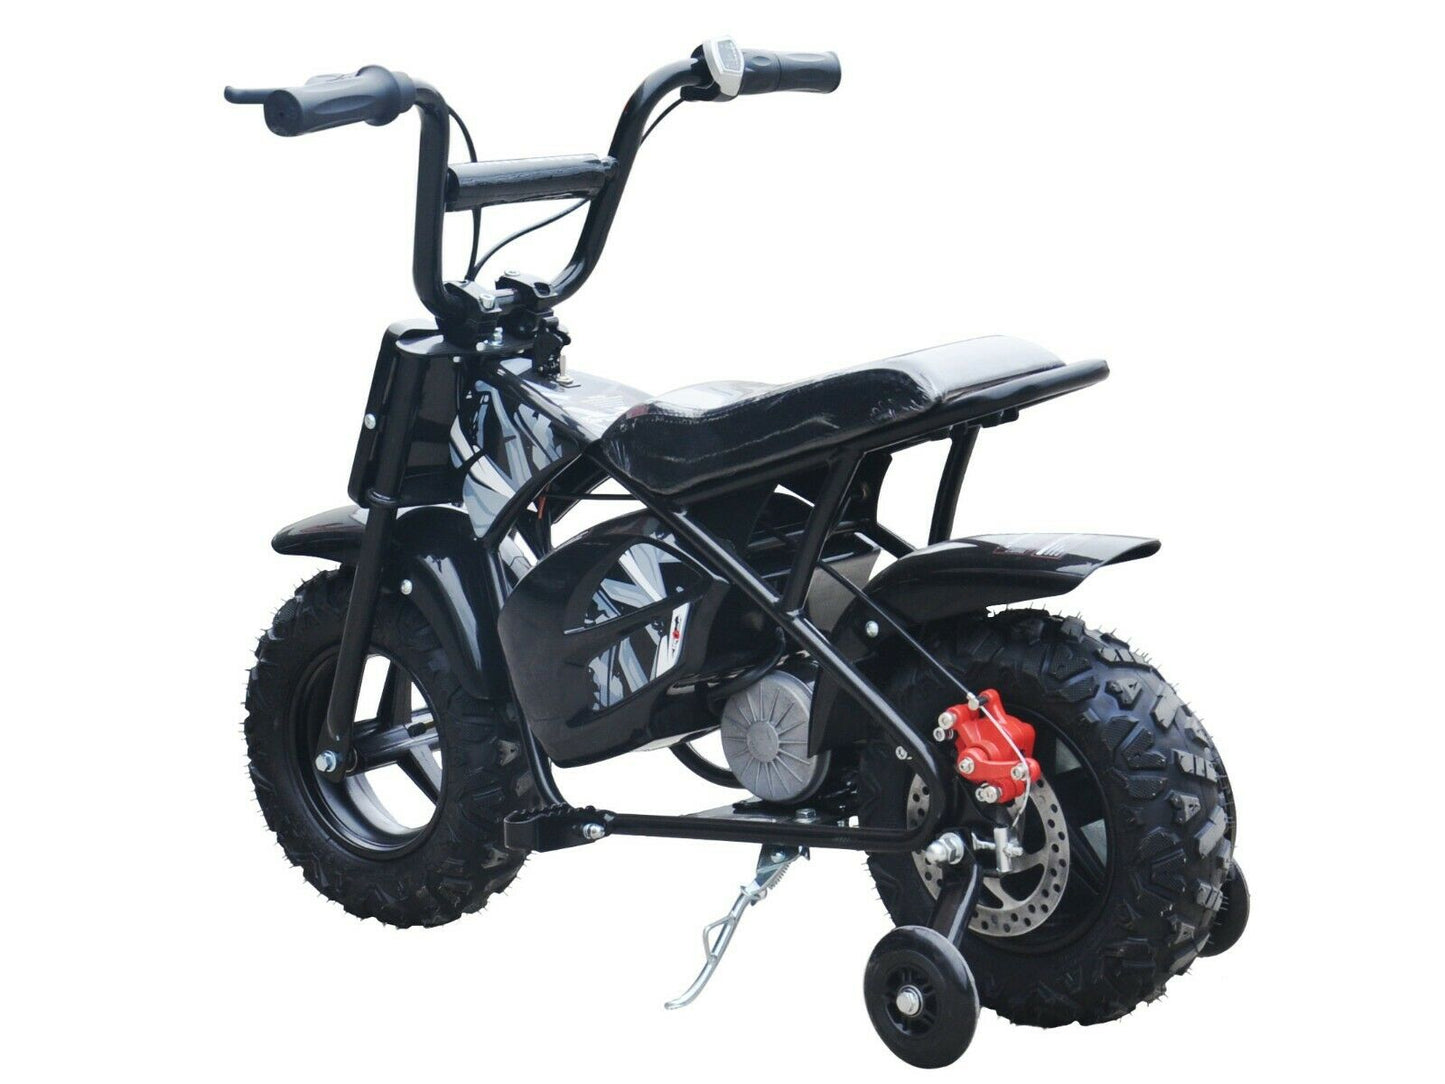 Children’s Electric 250w Monkey Bike Pit Blike Dirt Bike in Black